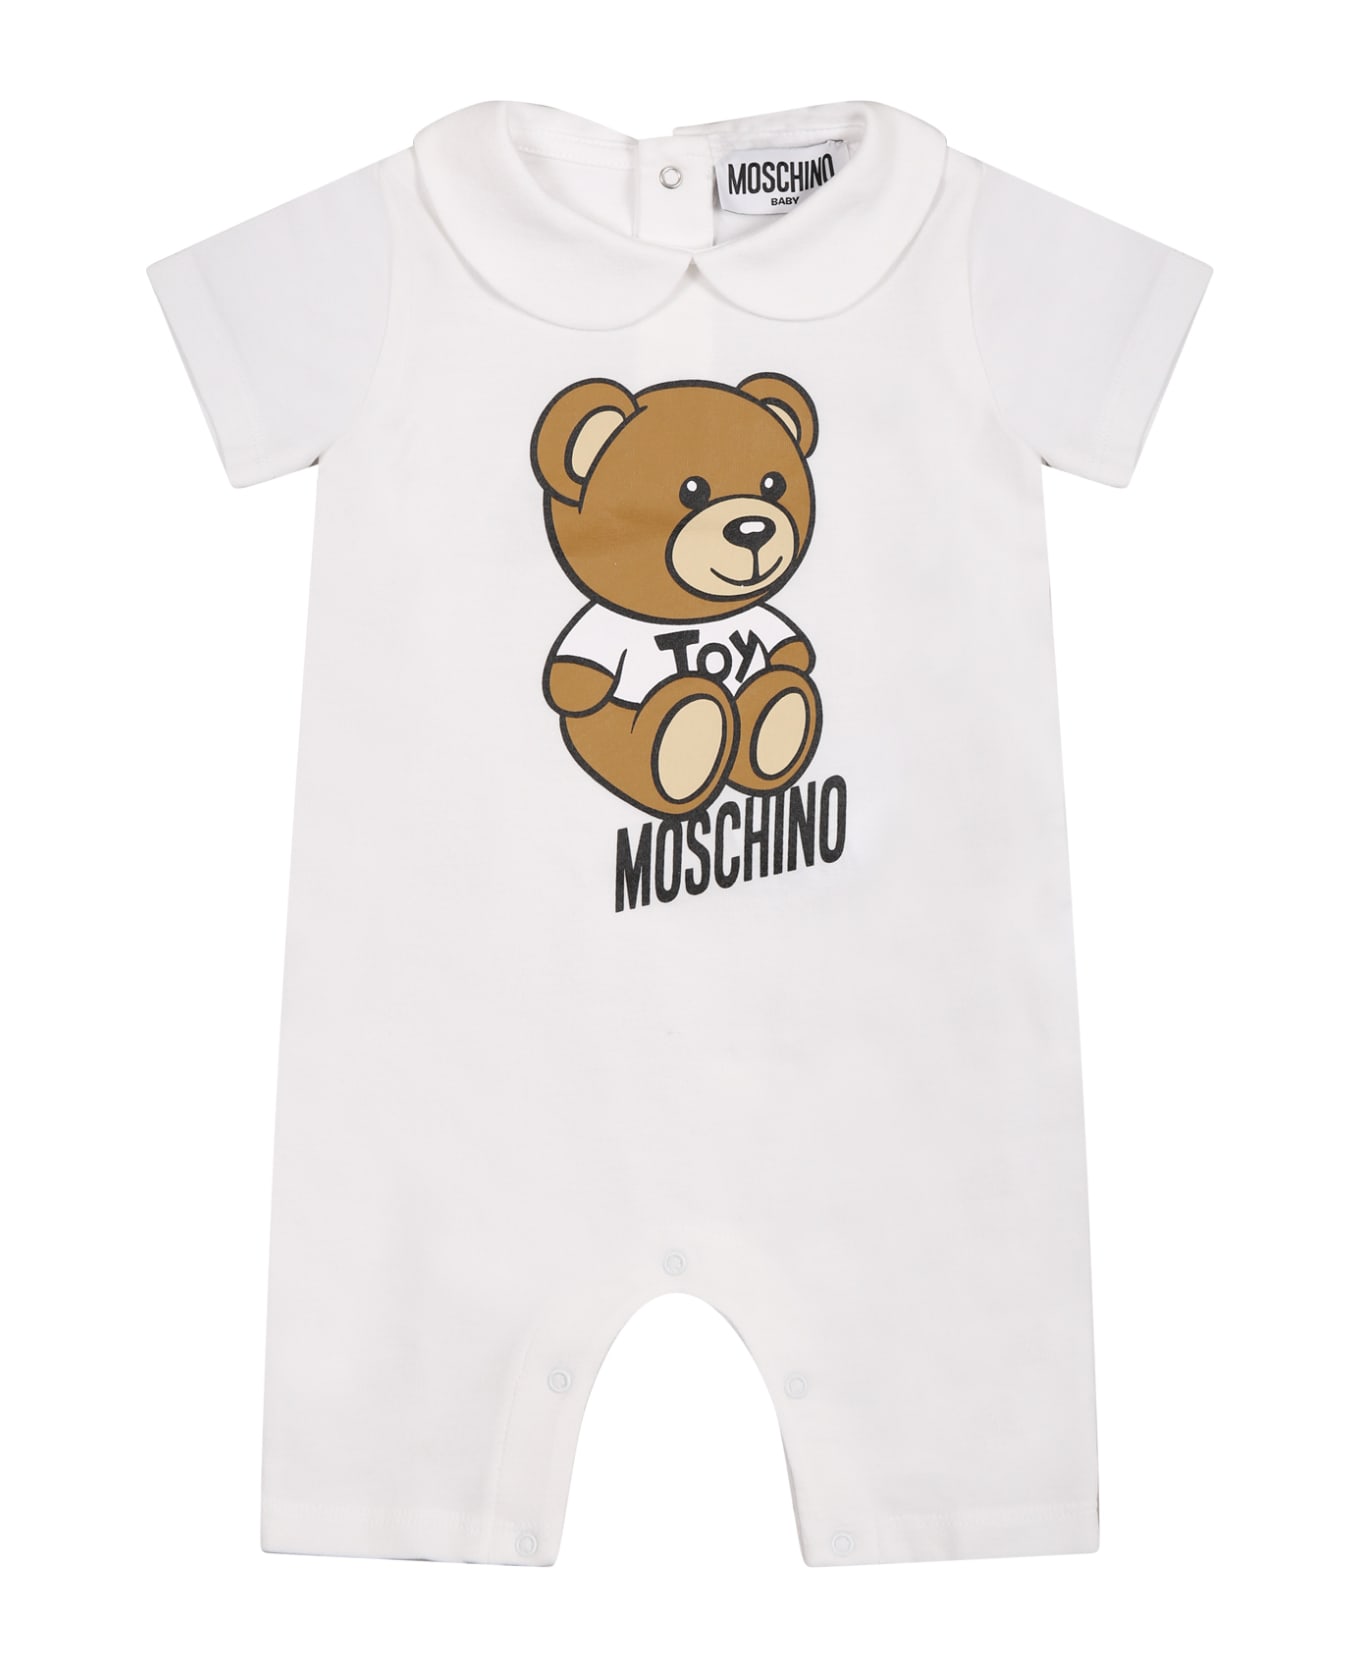 Moschino White Romper For Babykids With Teddy Bear - White